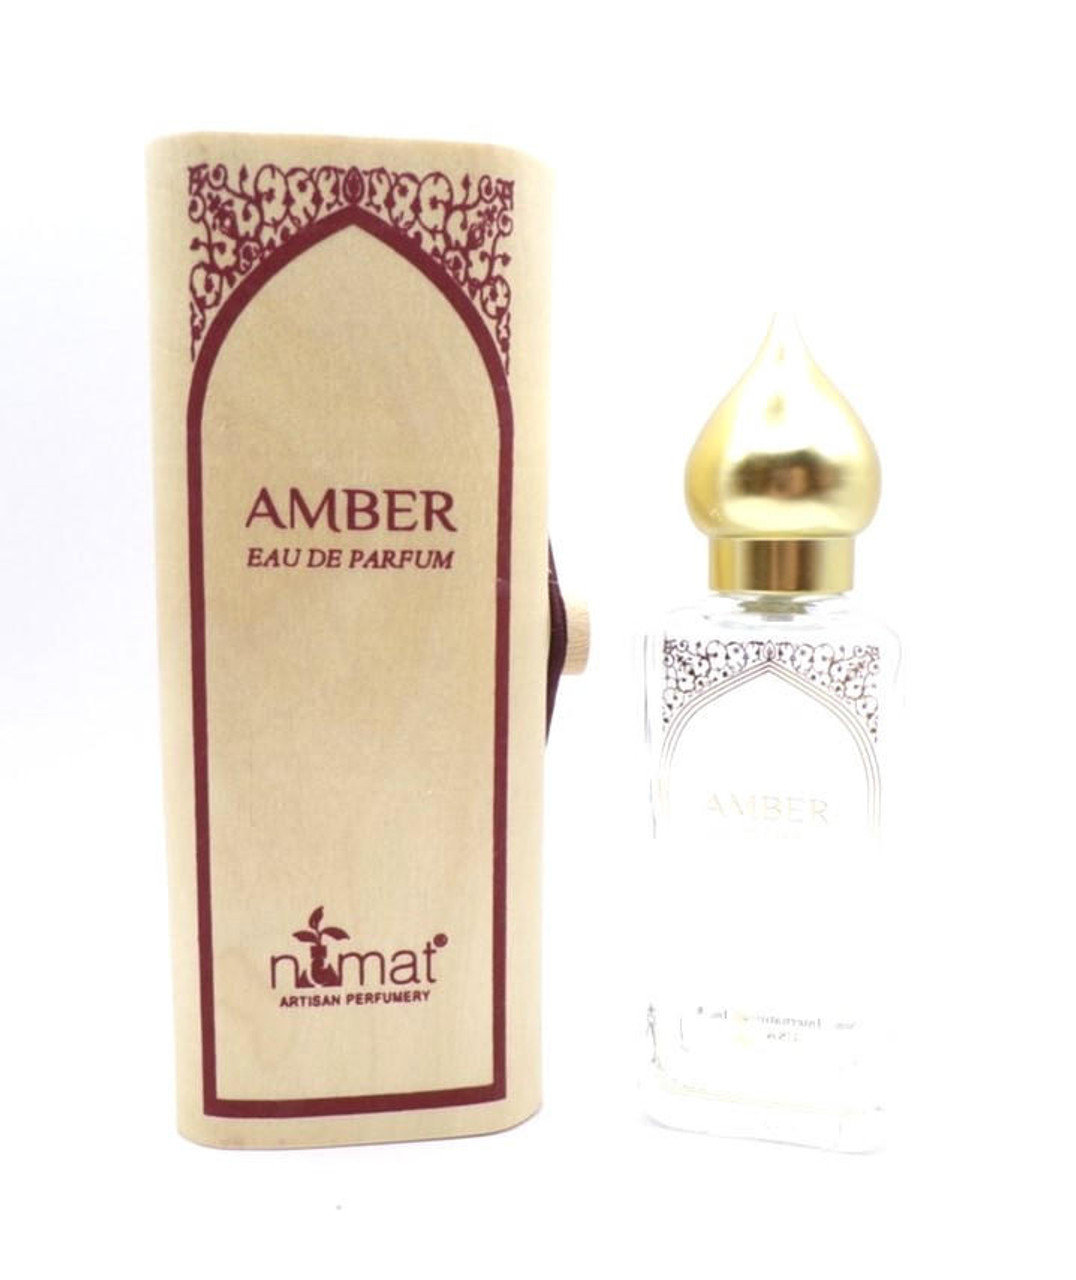 Amber Eau de Parfum 50 ml - Ullman's Health and Beauty